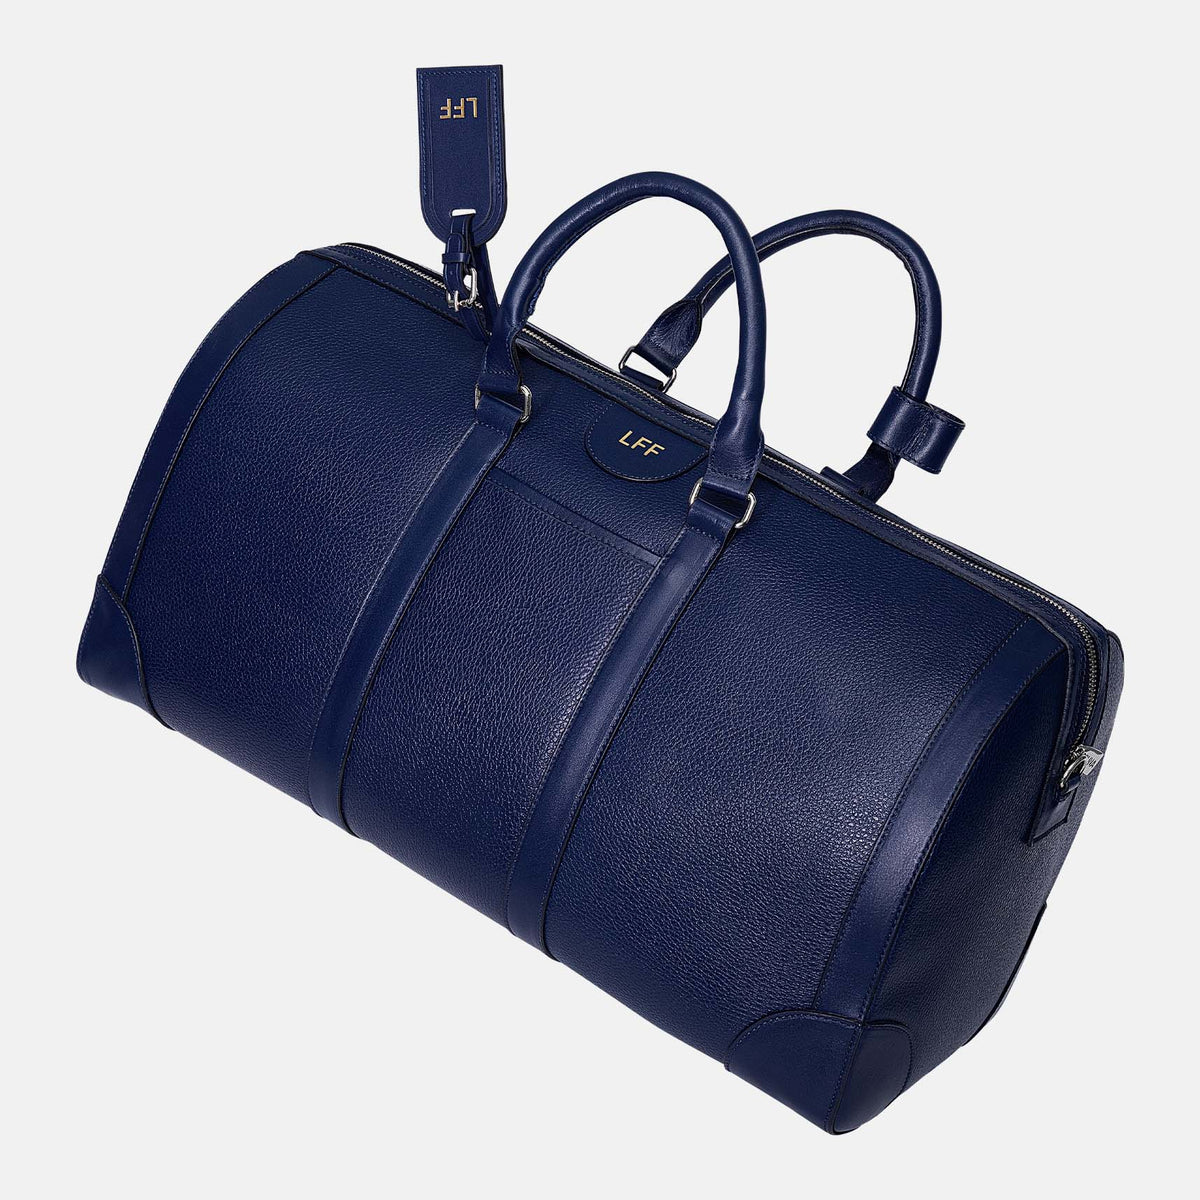 The Duffle Bag - Navy Blue